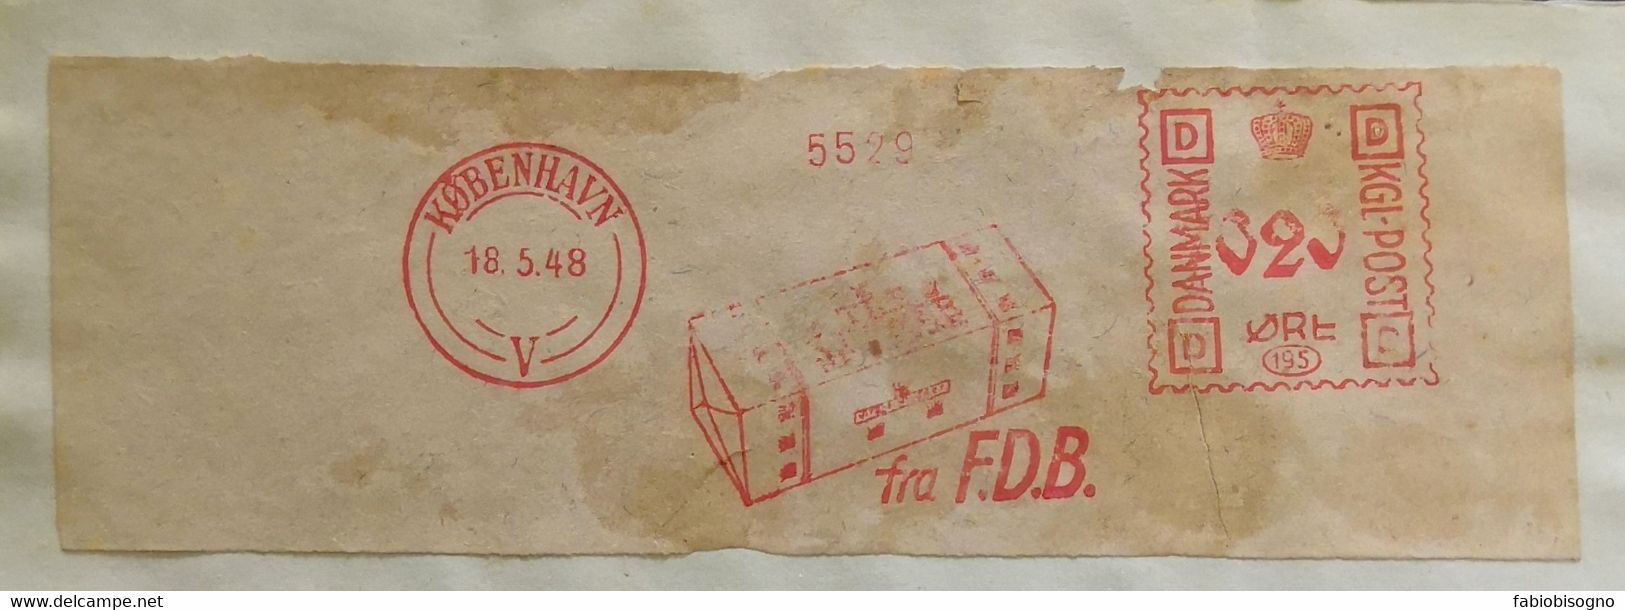 Danmark 1948 - Fra F.D.B. - EMA Meter Freistempel Fragment - Macchine Per Obliterare (EMA)